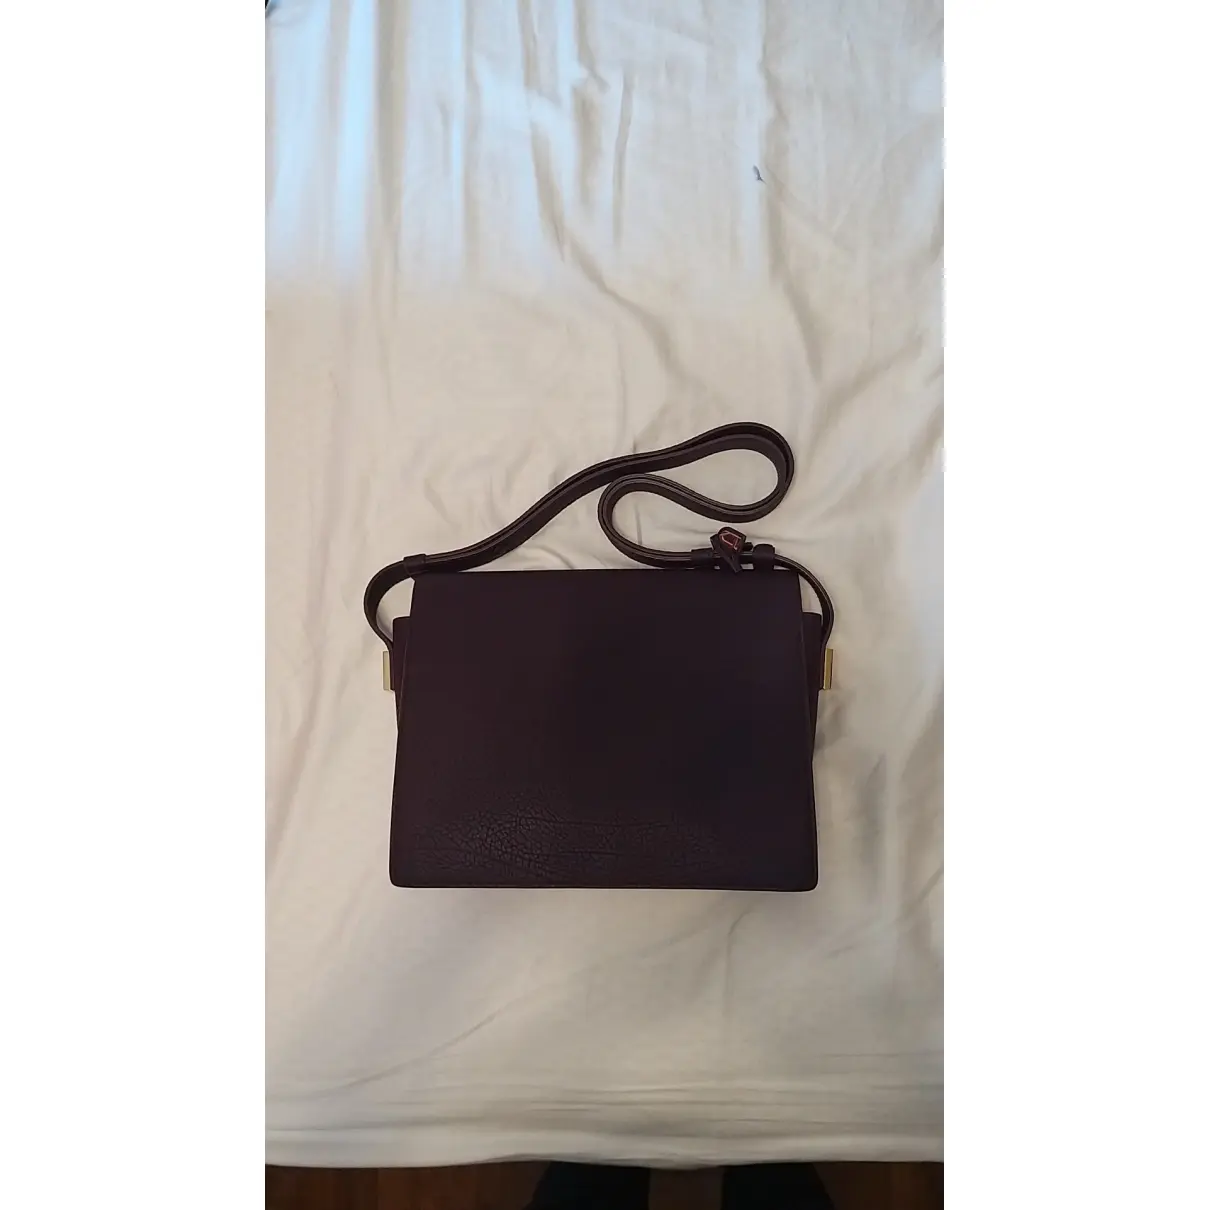 Buy Delvaux Madame leather handbag online